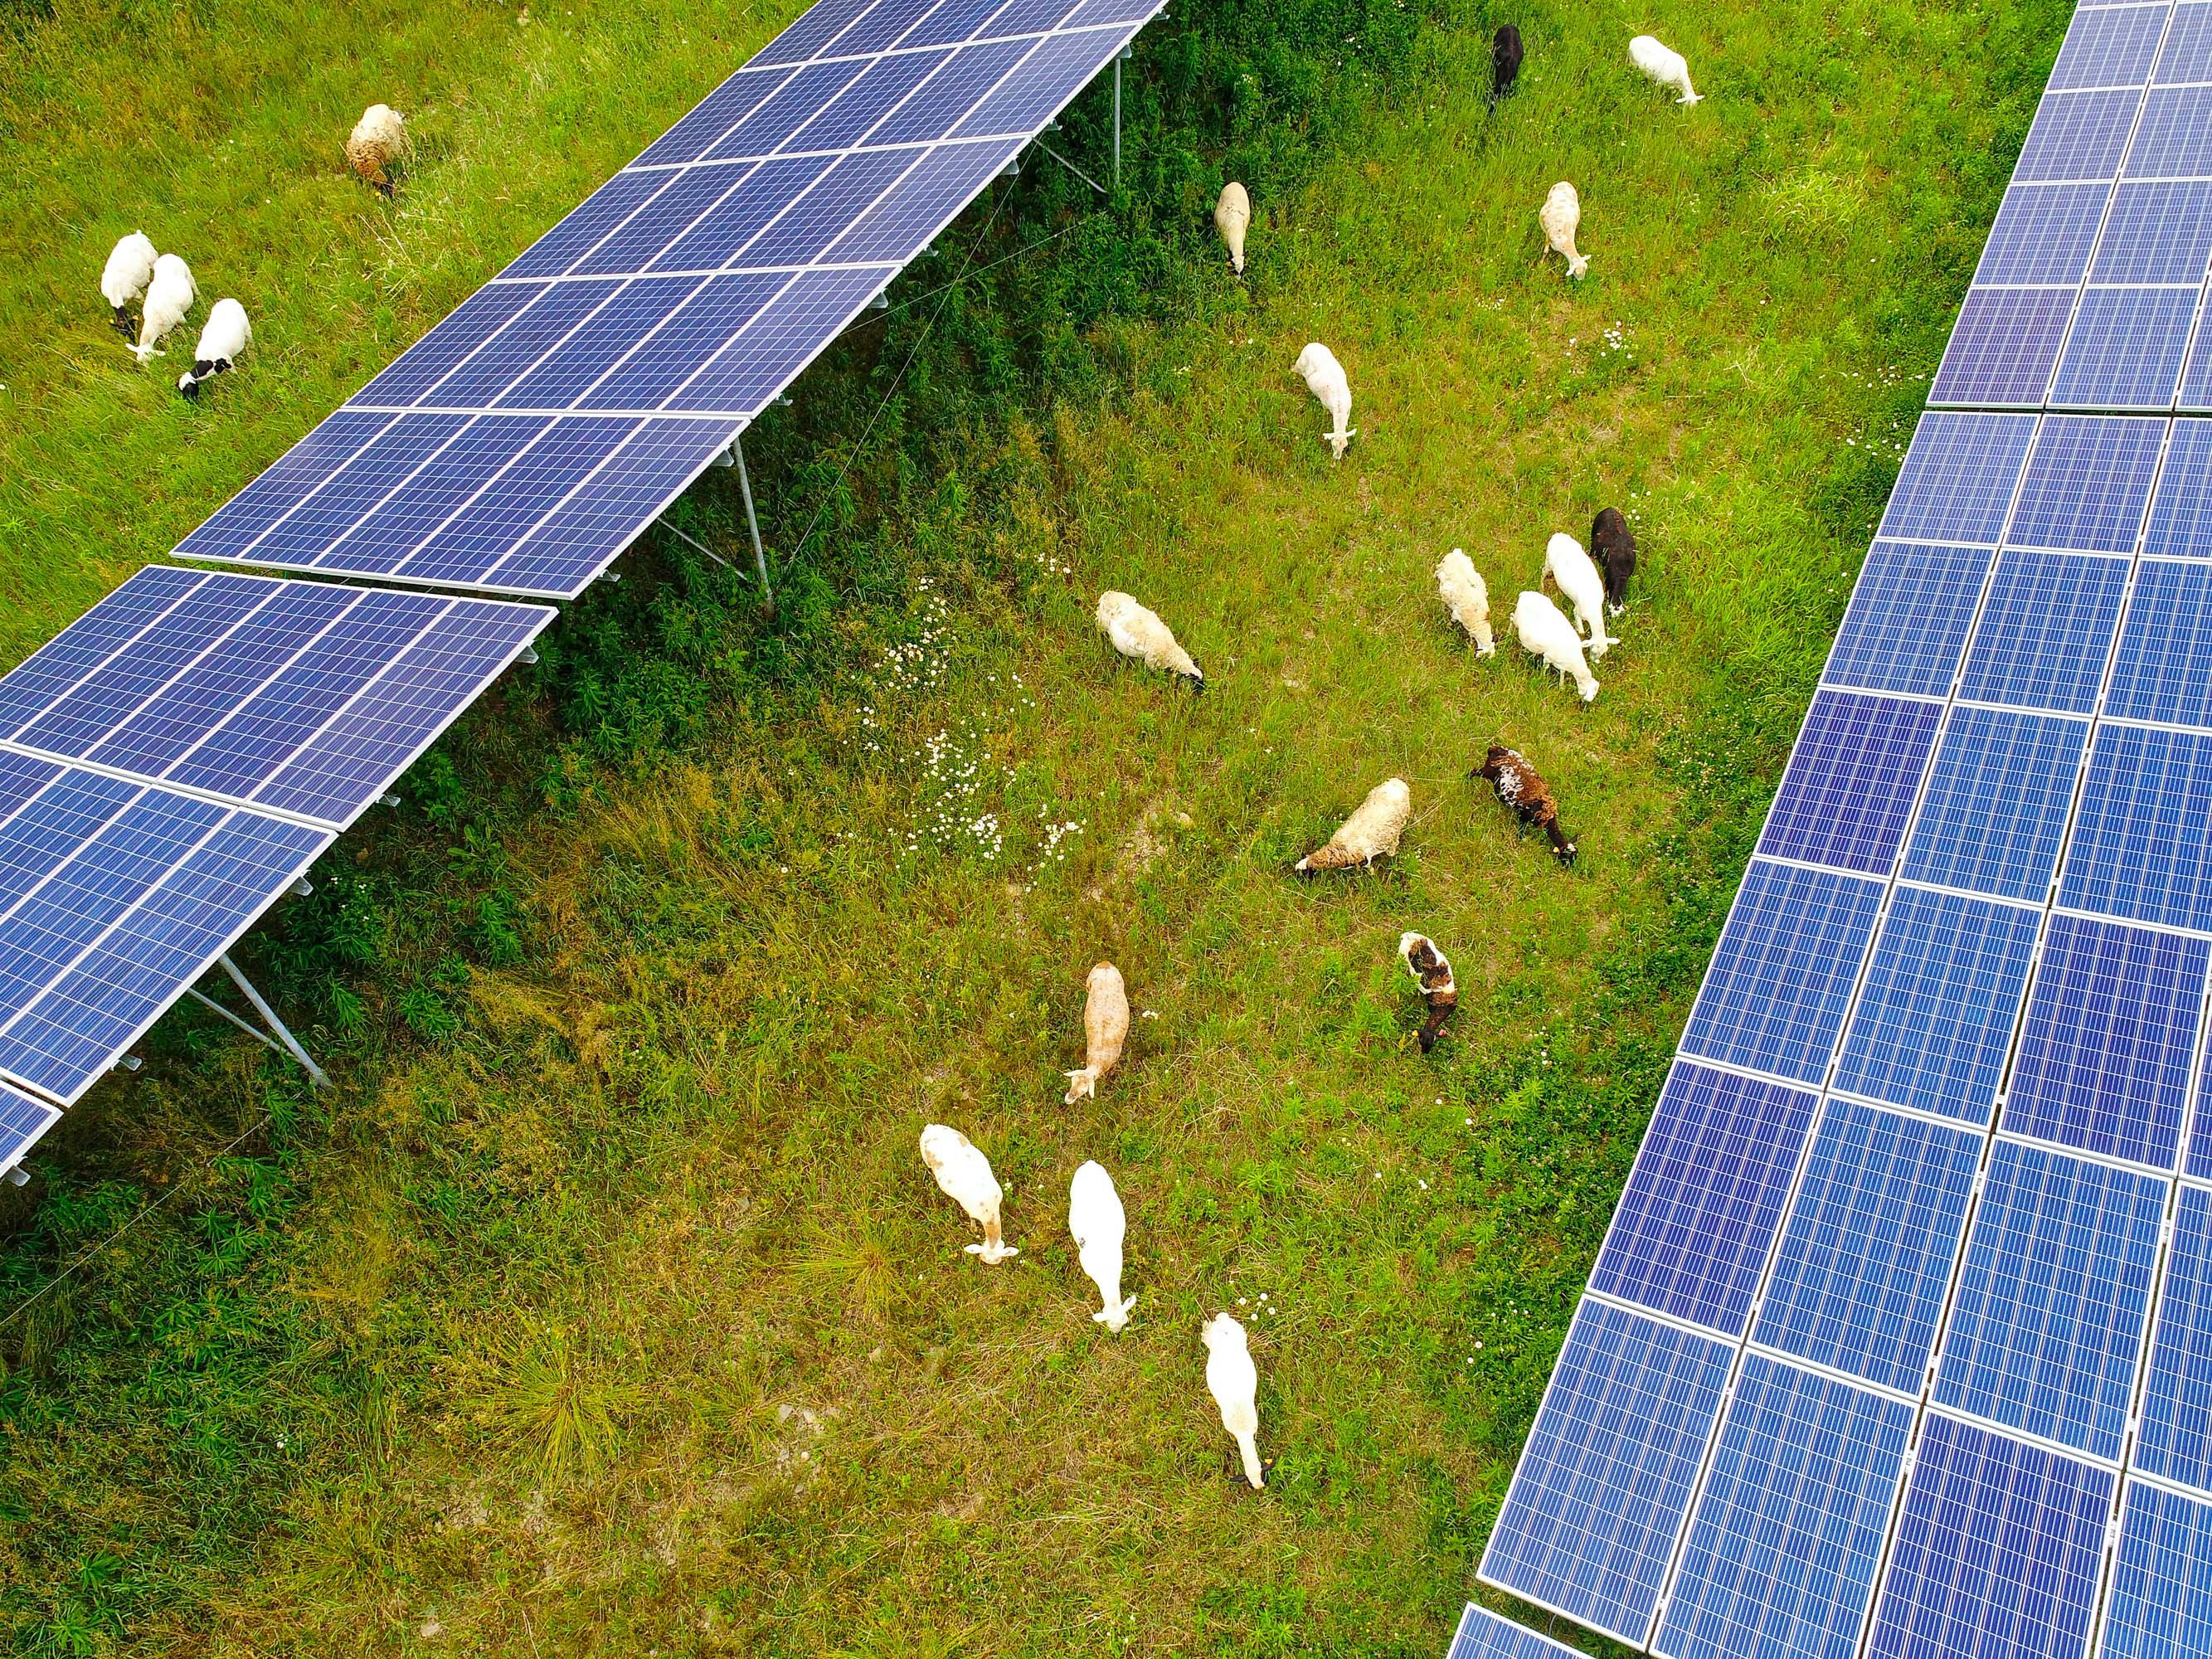 Solar sheep